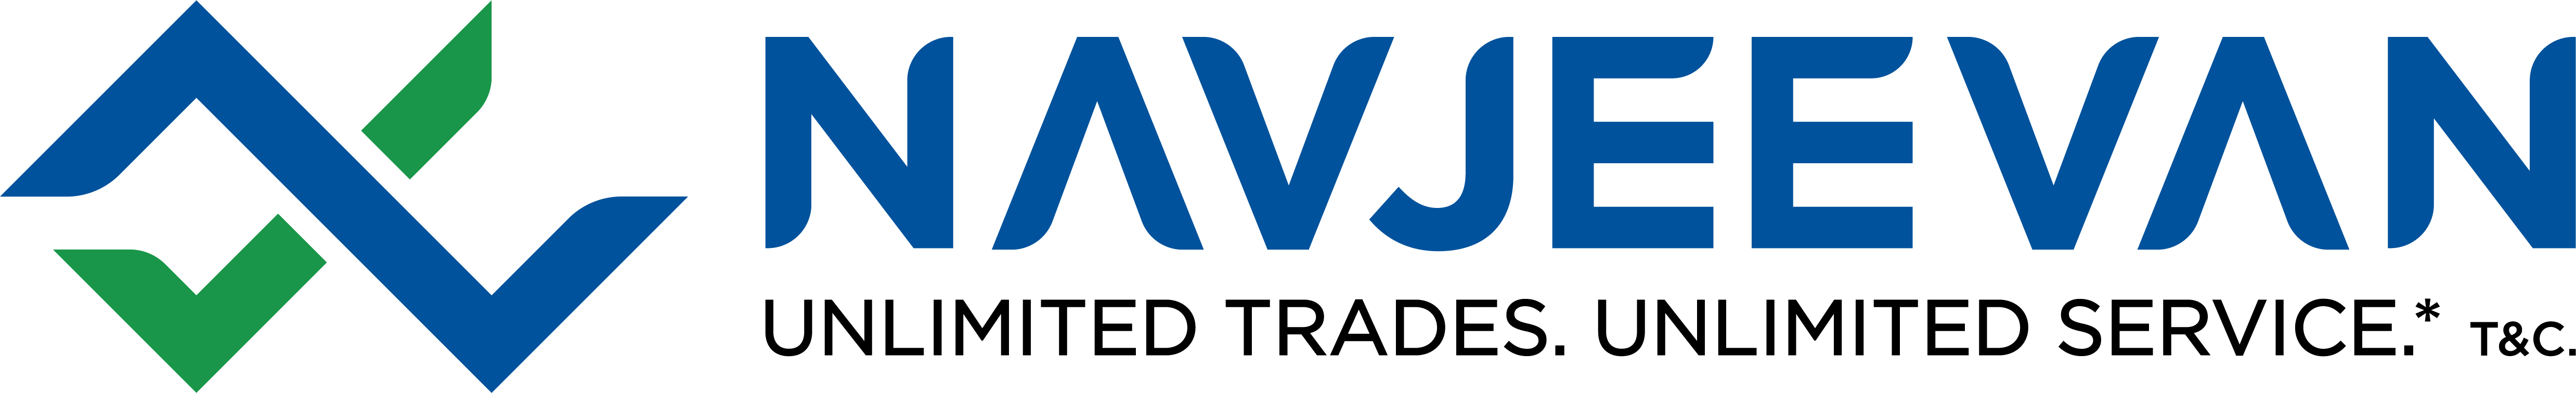 Navjeevan-logo